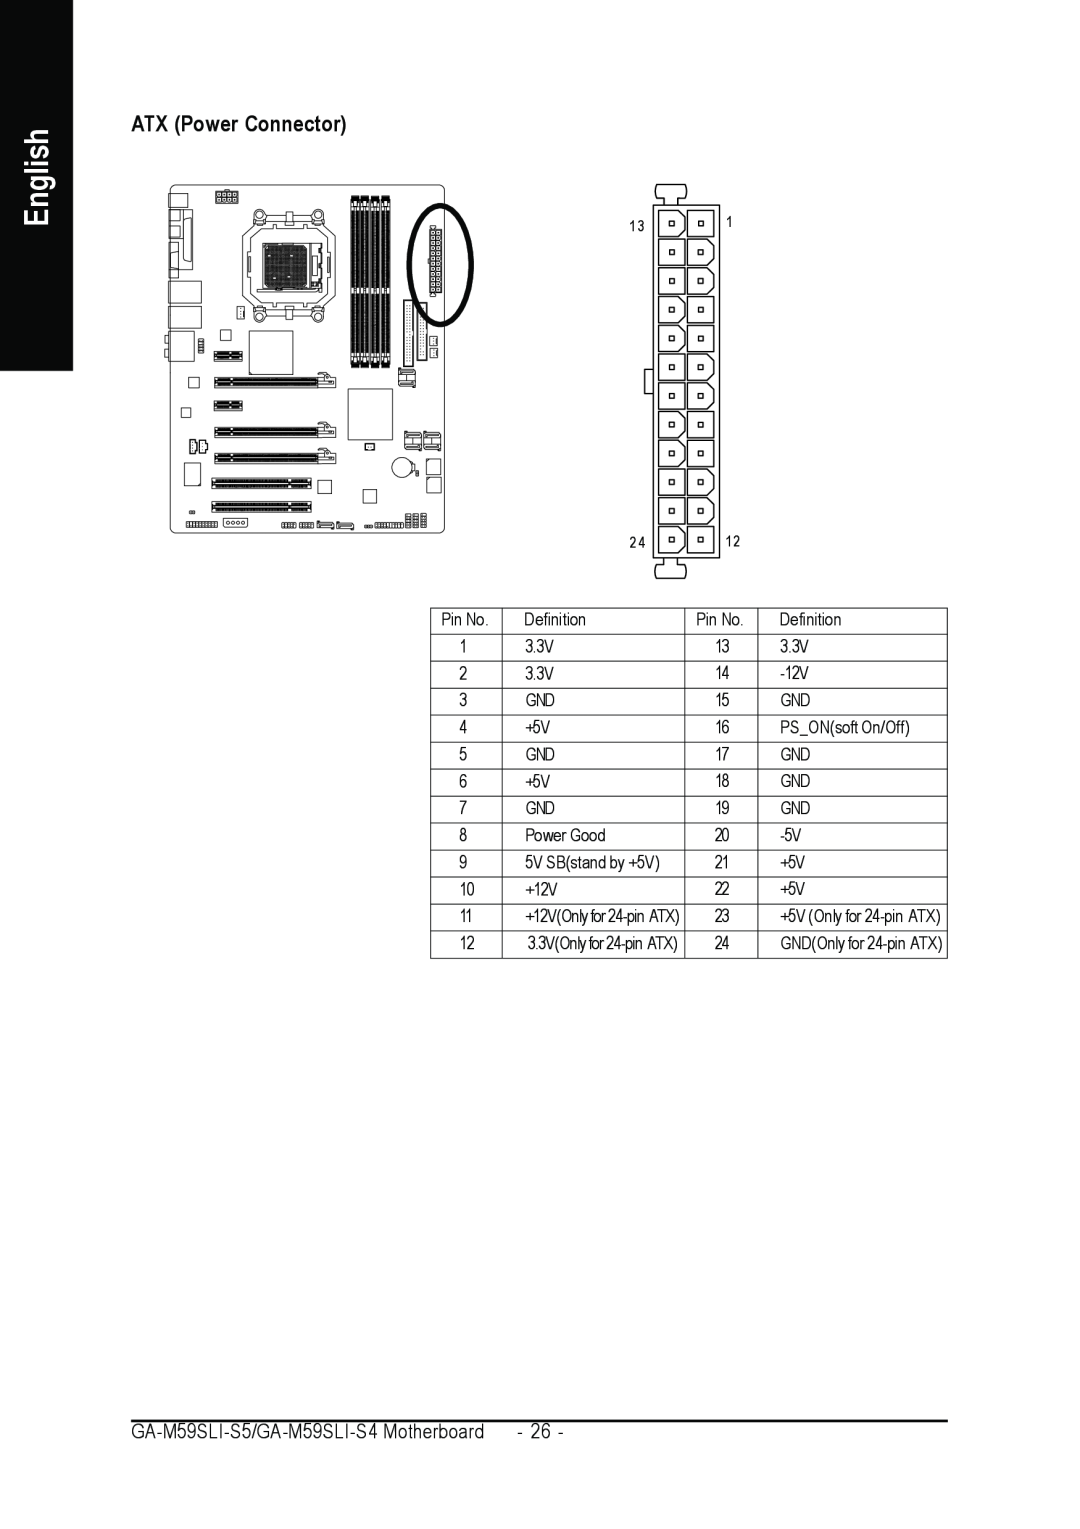 Gigabyte GA-M59SLI-S5, GA-M59SLI-S4 ATX Power Connector, English, +5V Only for 24-pin ATX, GNDOnly for 24-pin ATX 